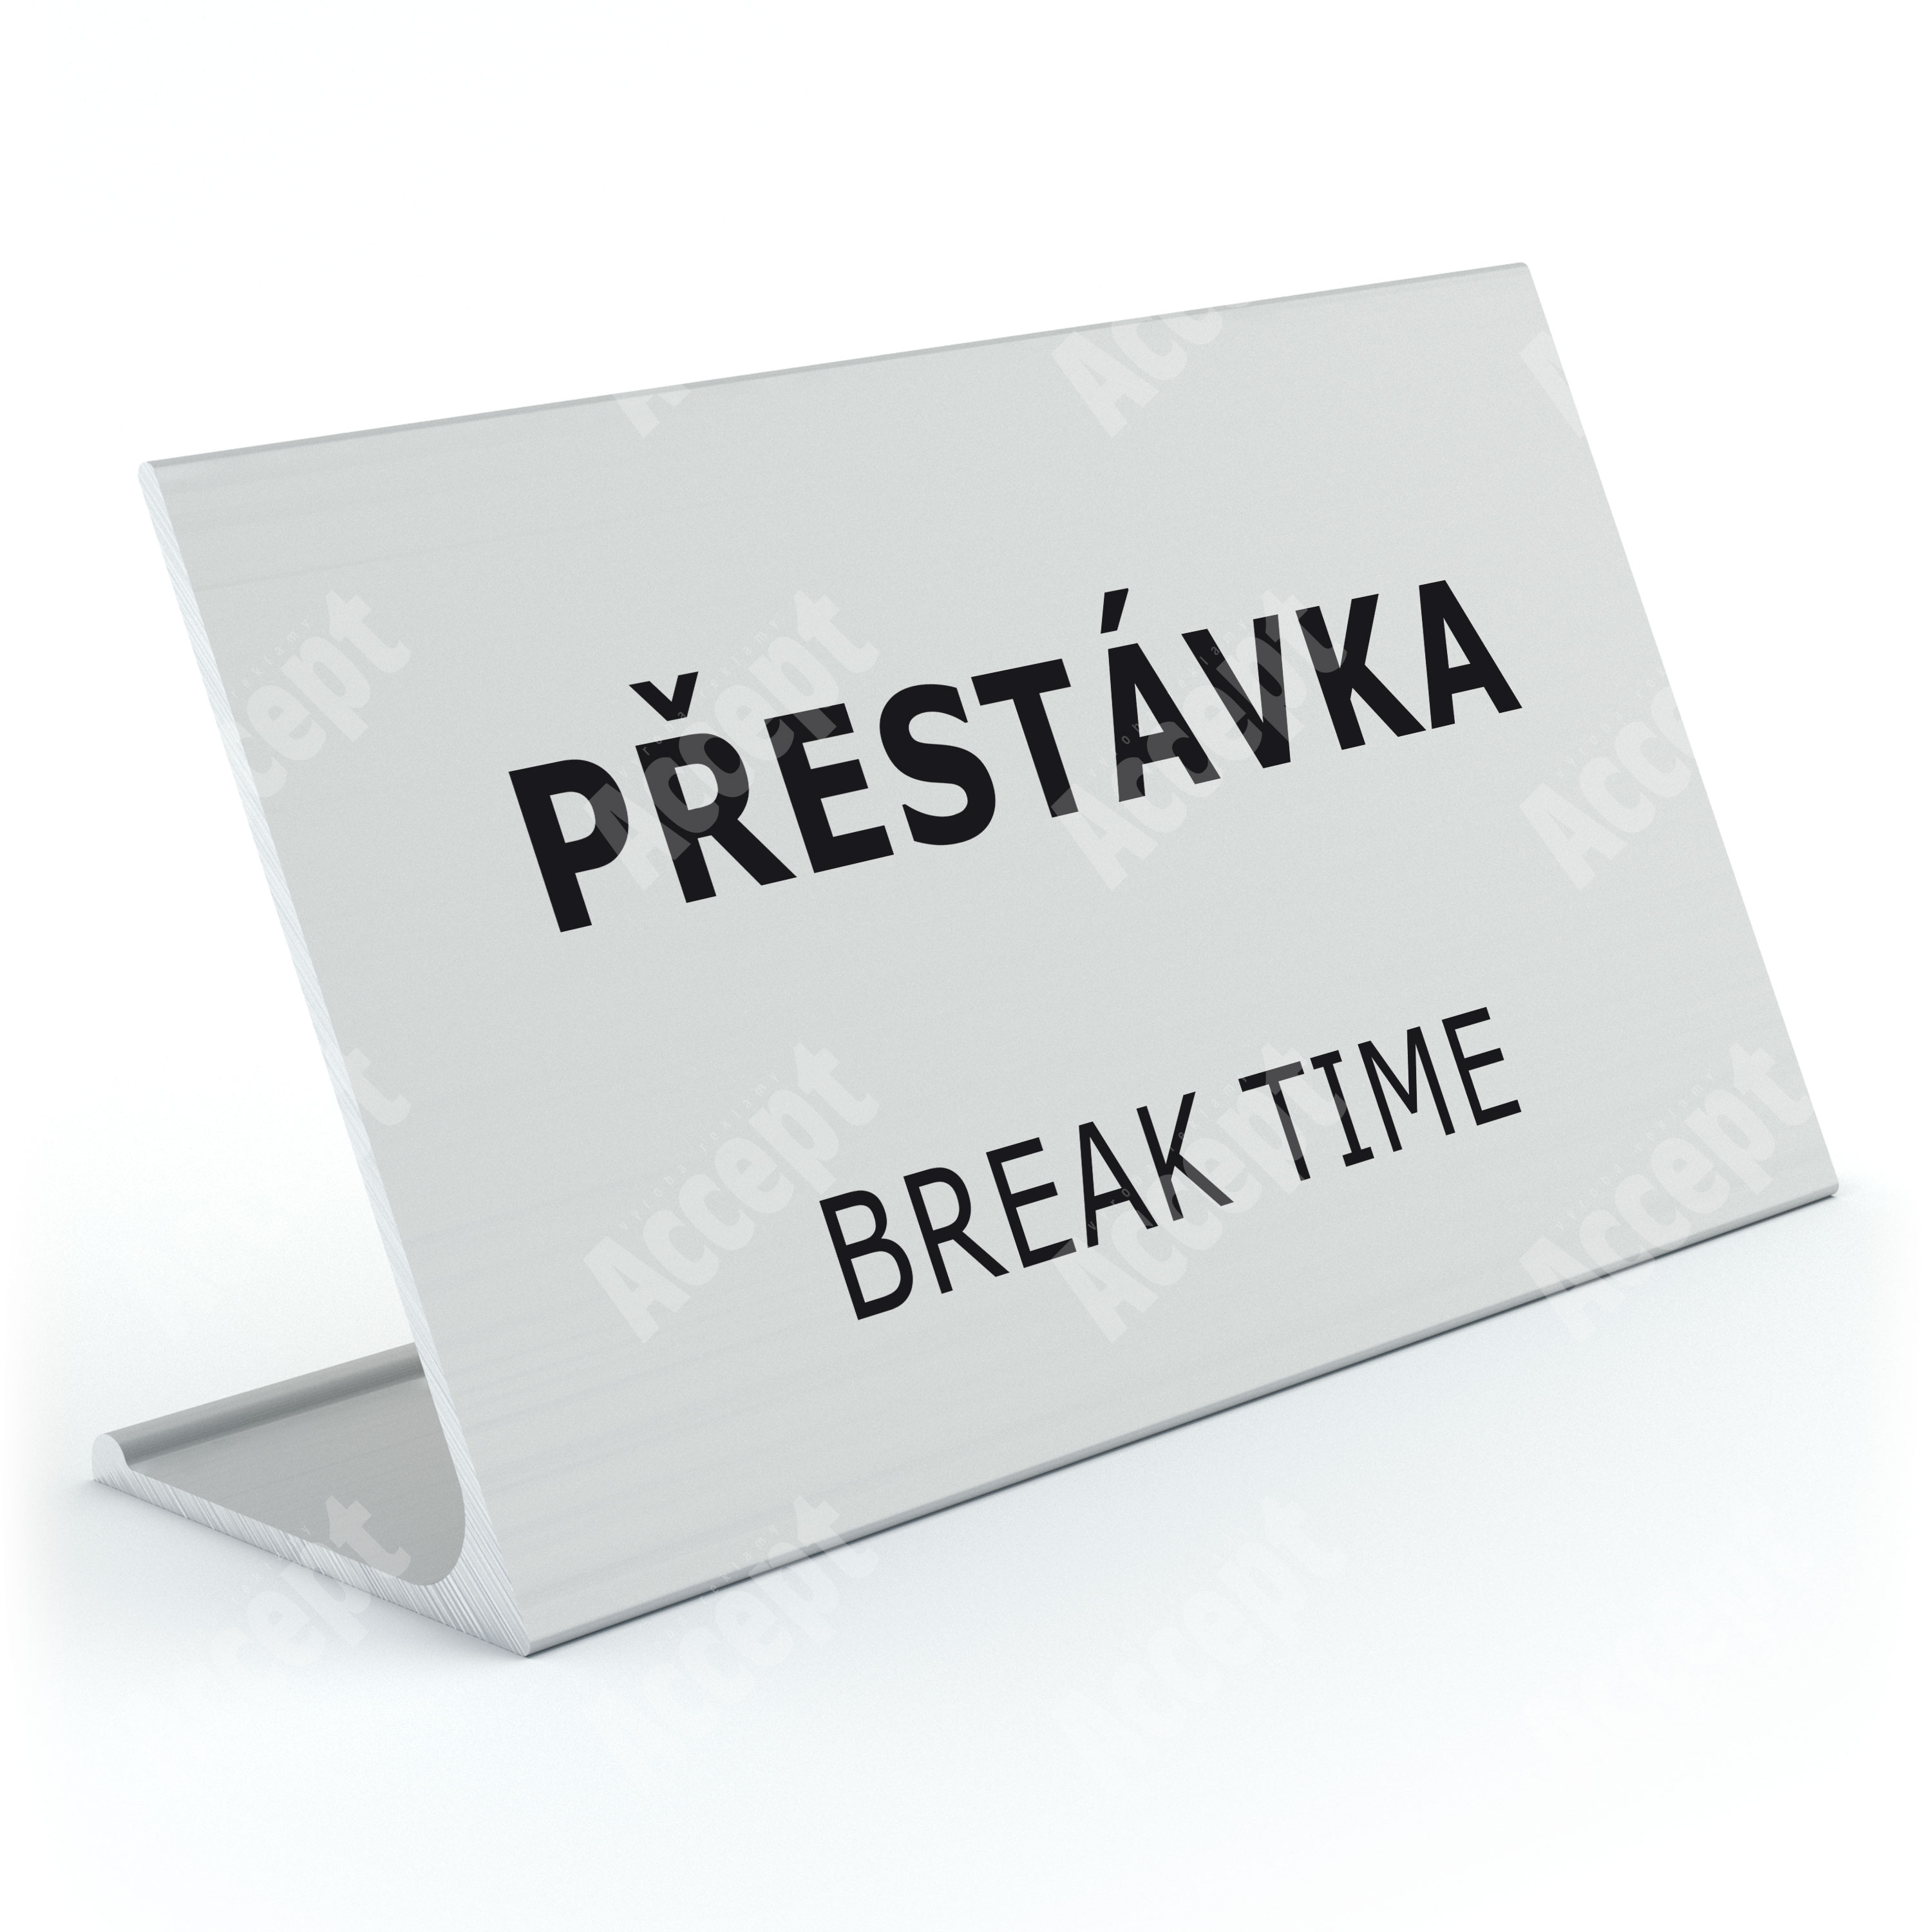 Informan stojnek D-62 "PESTVKA, BREAK TIME"